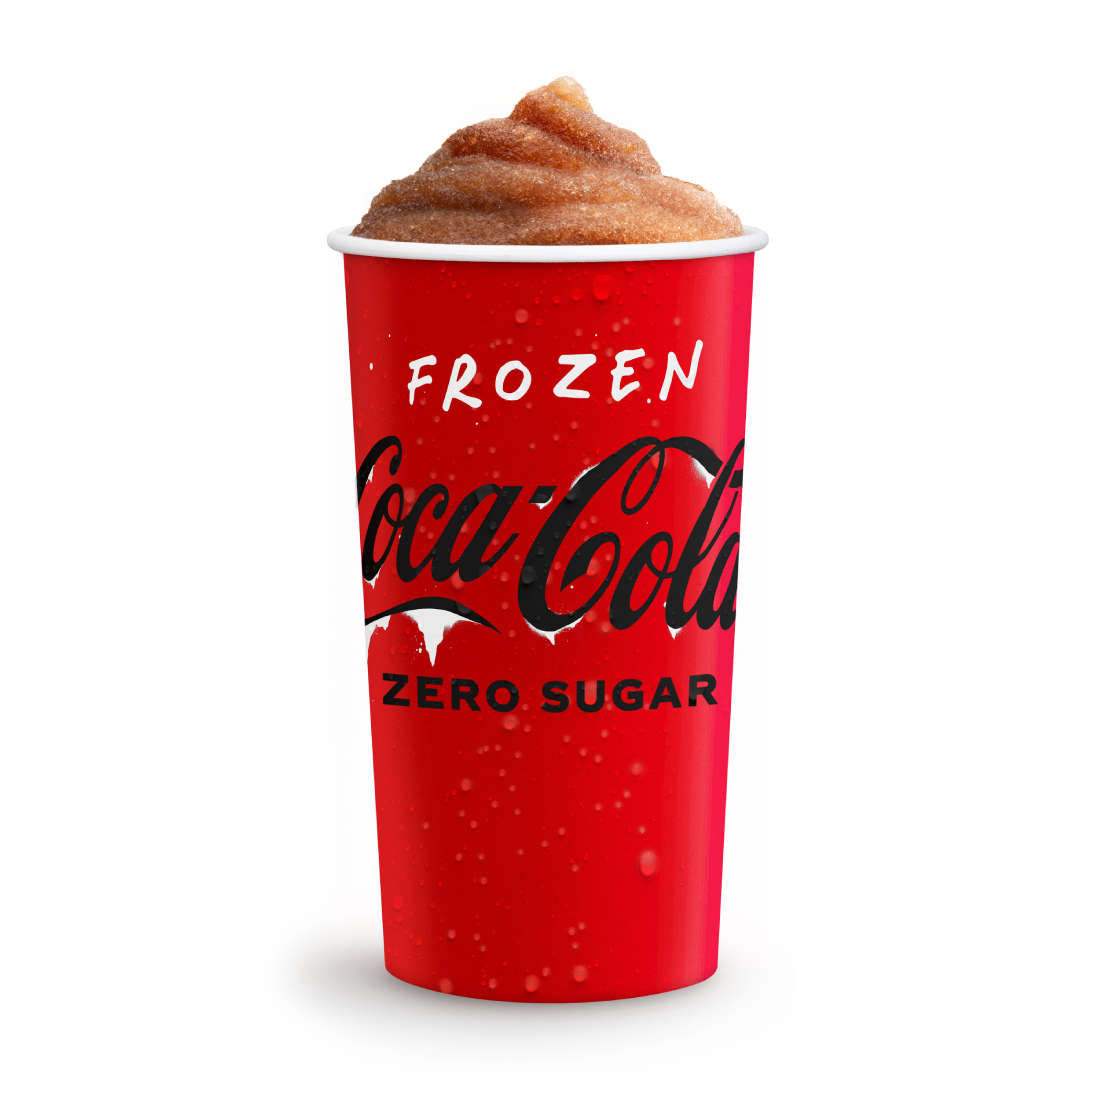 Frozen Coke Zero Sugar cup